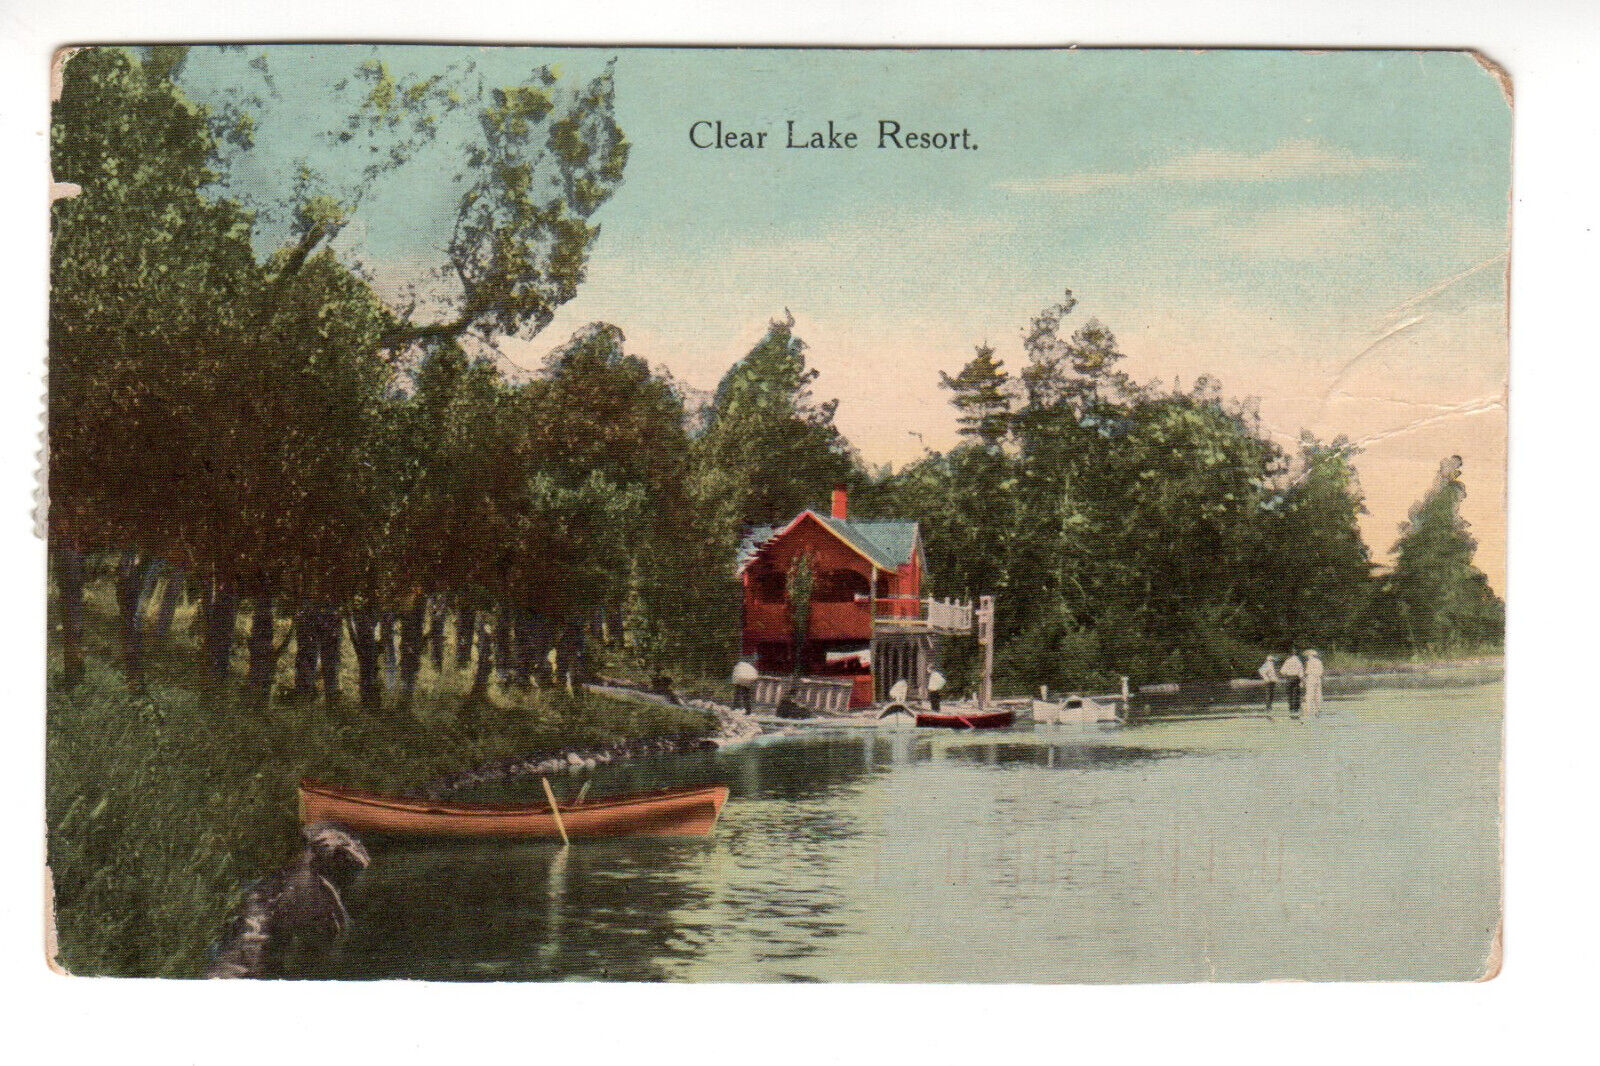 Postcard: Clear Lake Resort, MI (Michigan) - canoes, pier, dock